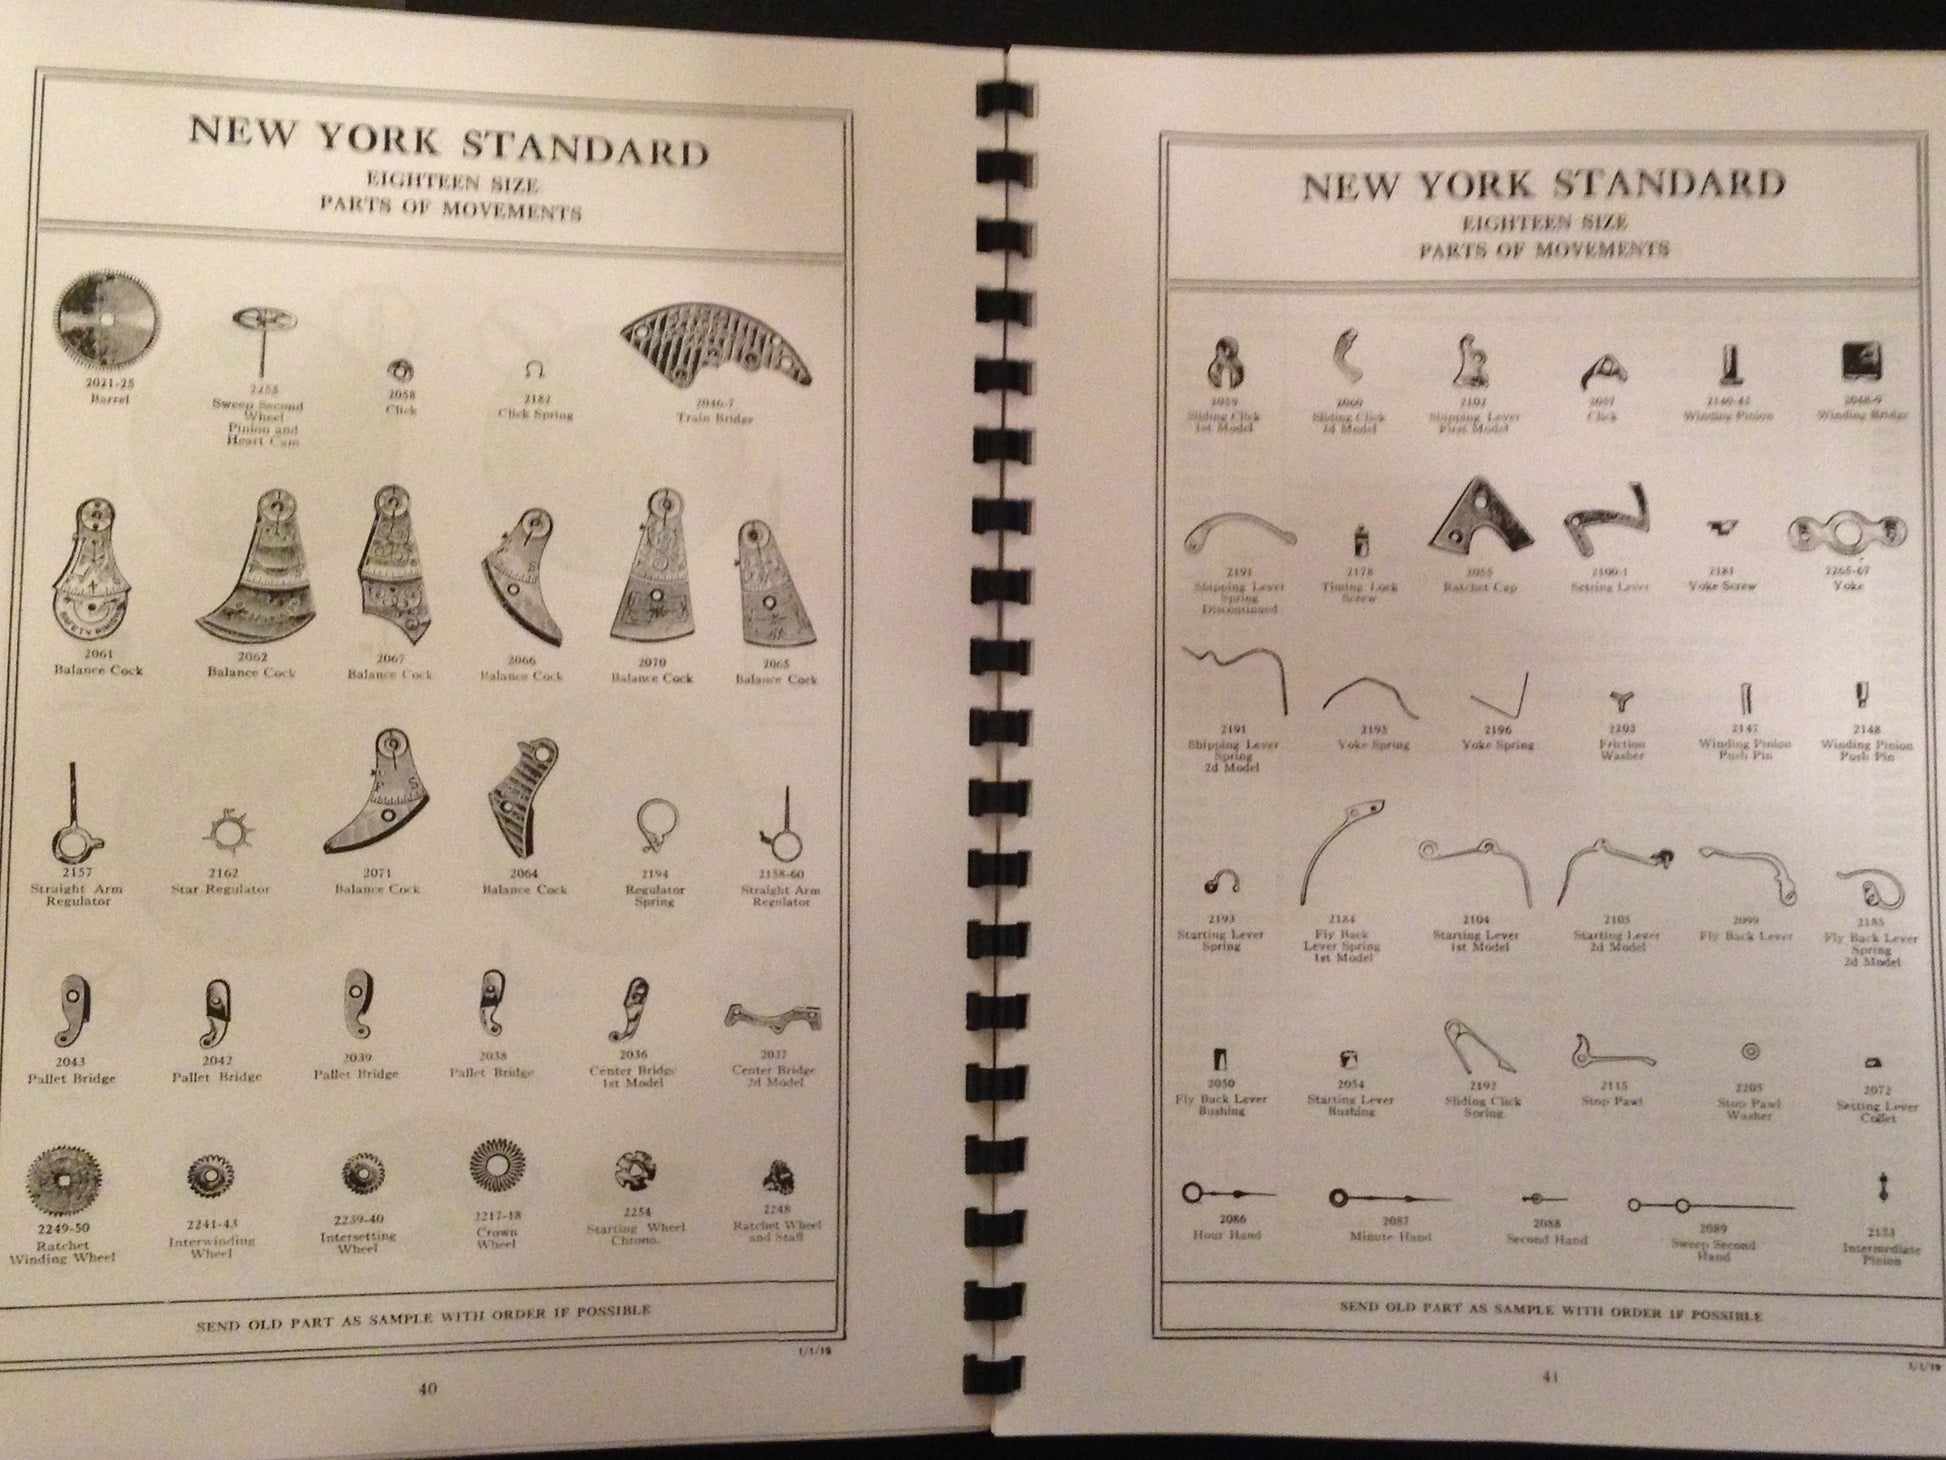 Keystone (Howard, Crown, NY Standard) Watch Material Catalog 1919 Ed - reprint